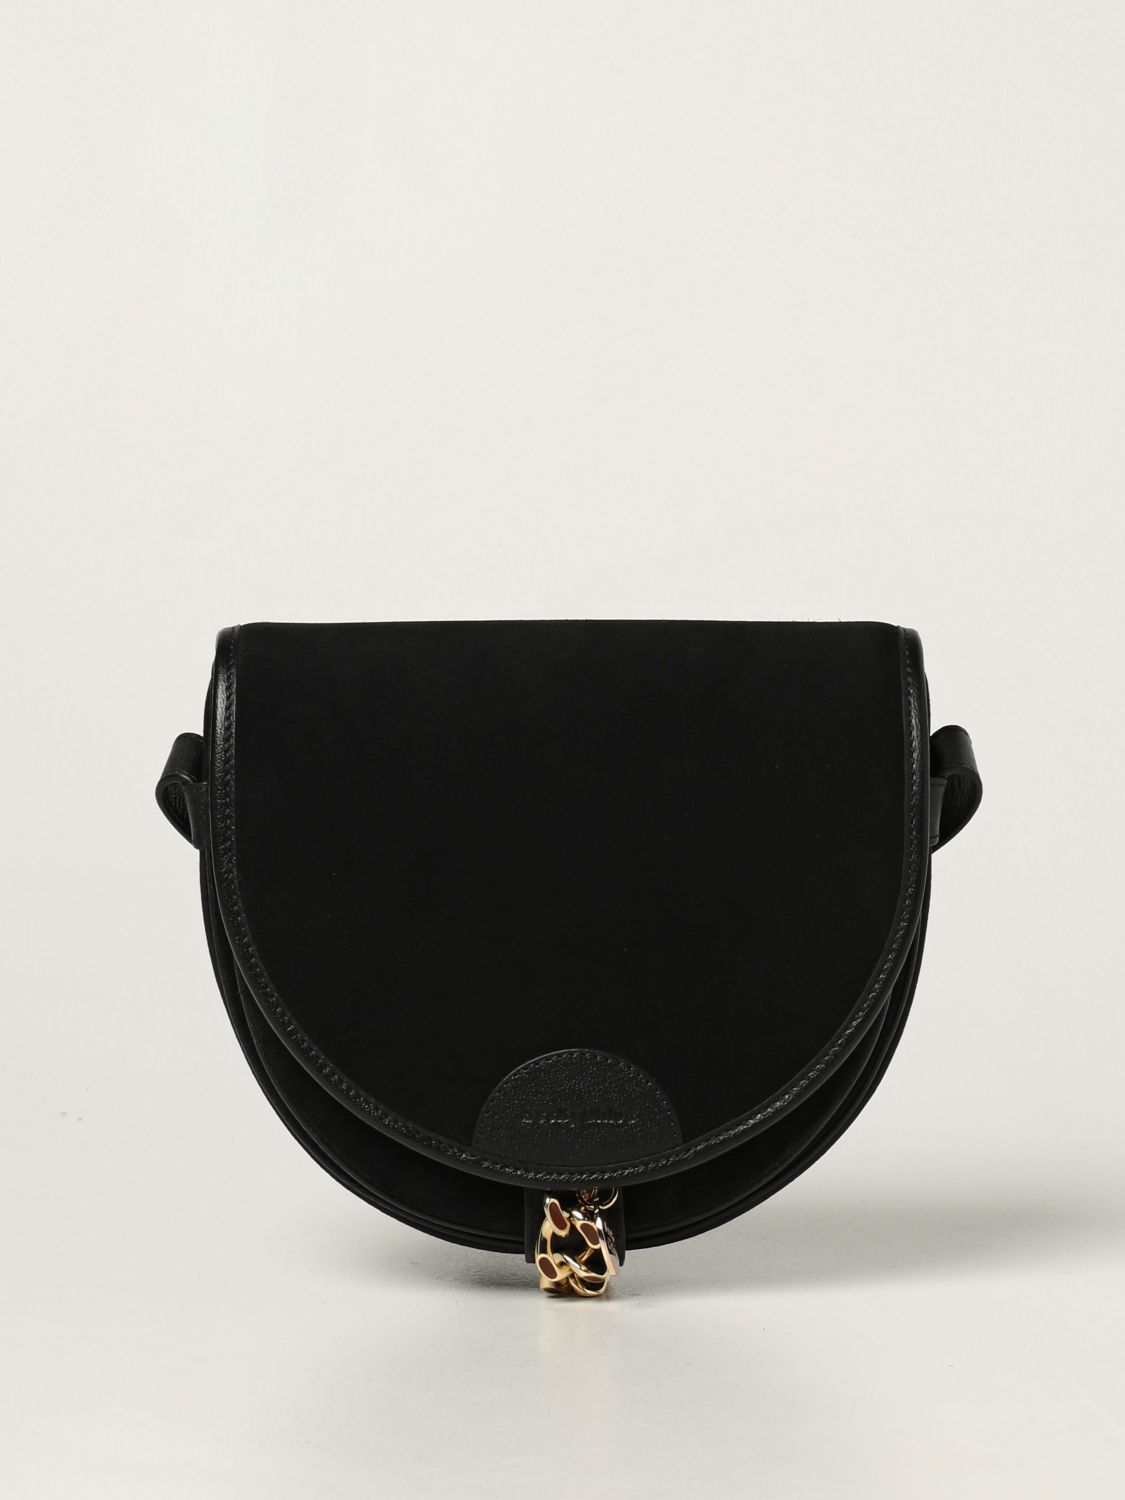 SEE BY CHLOÉ: Mara bag in suede - Black | Crossbody Bags See By Chloé ...